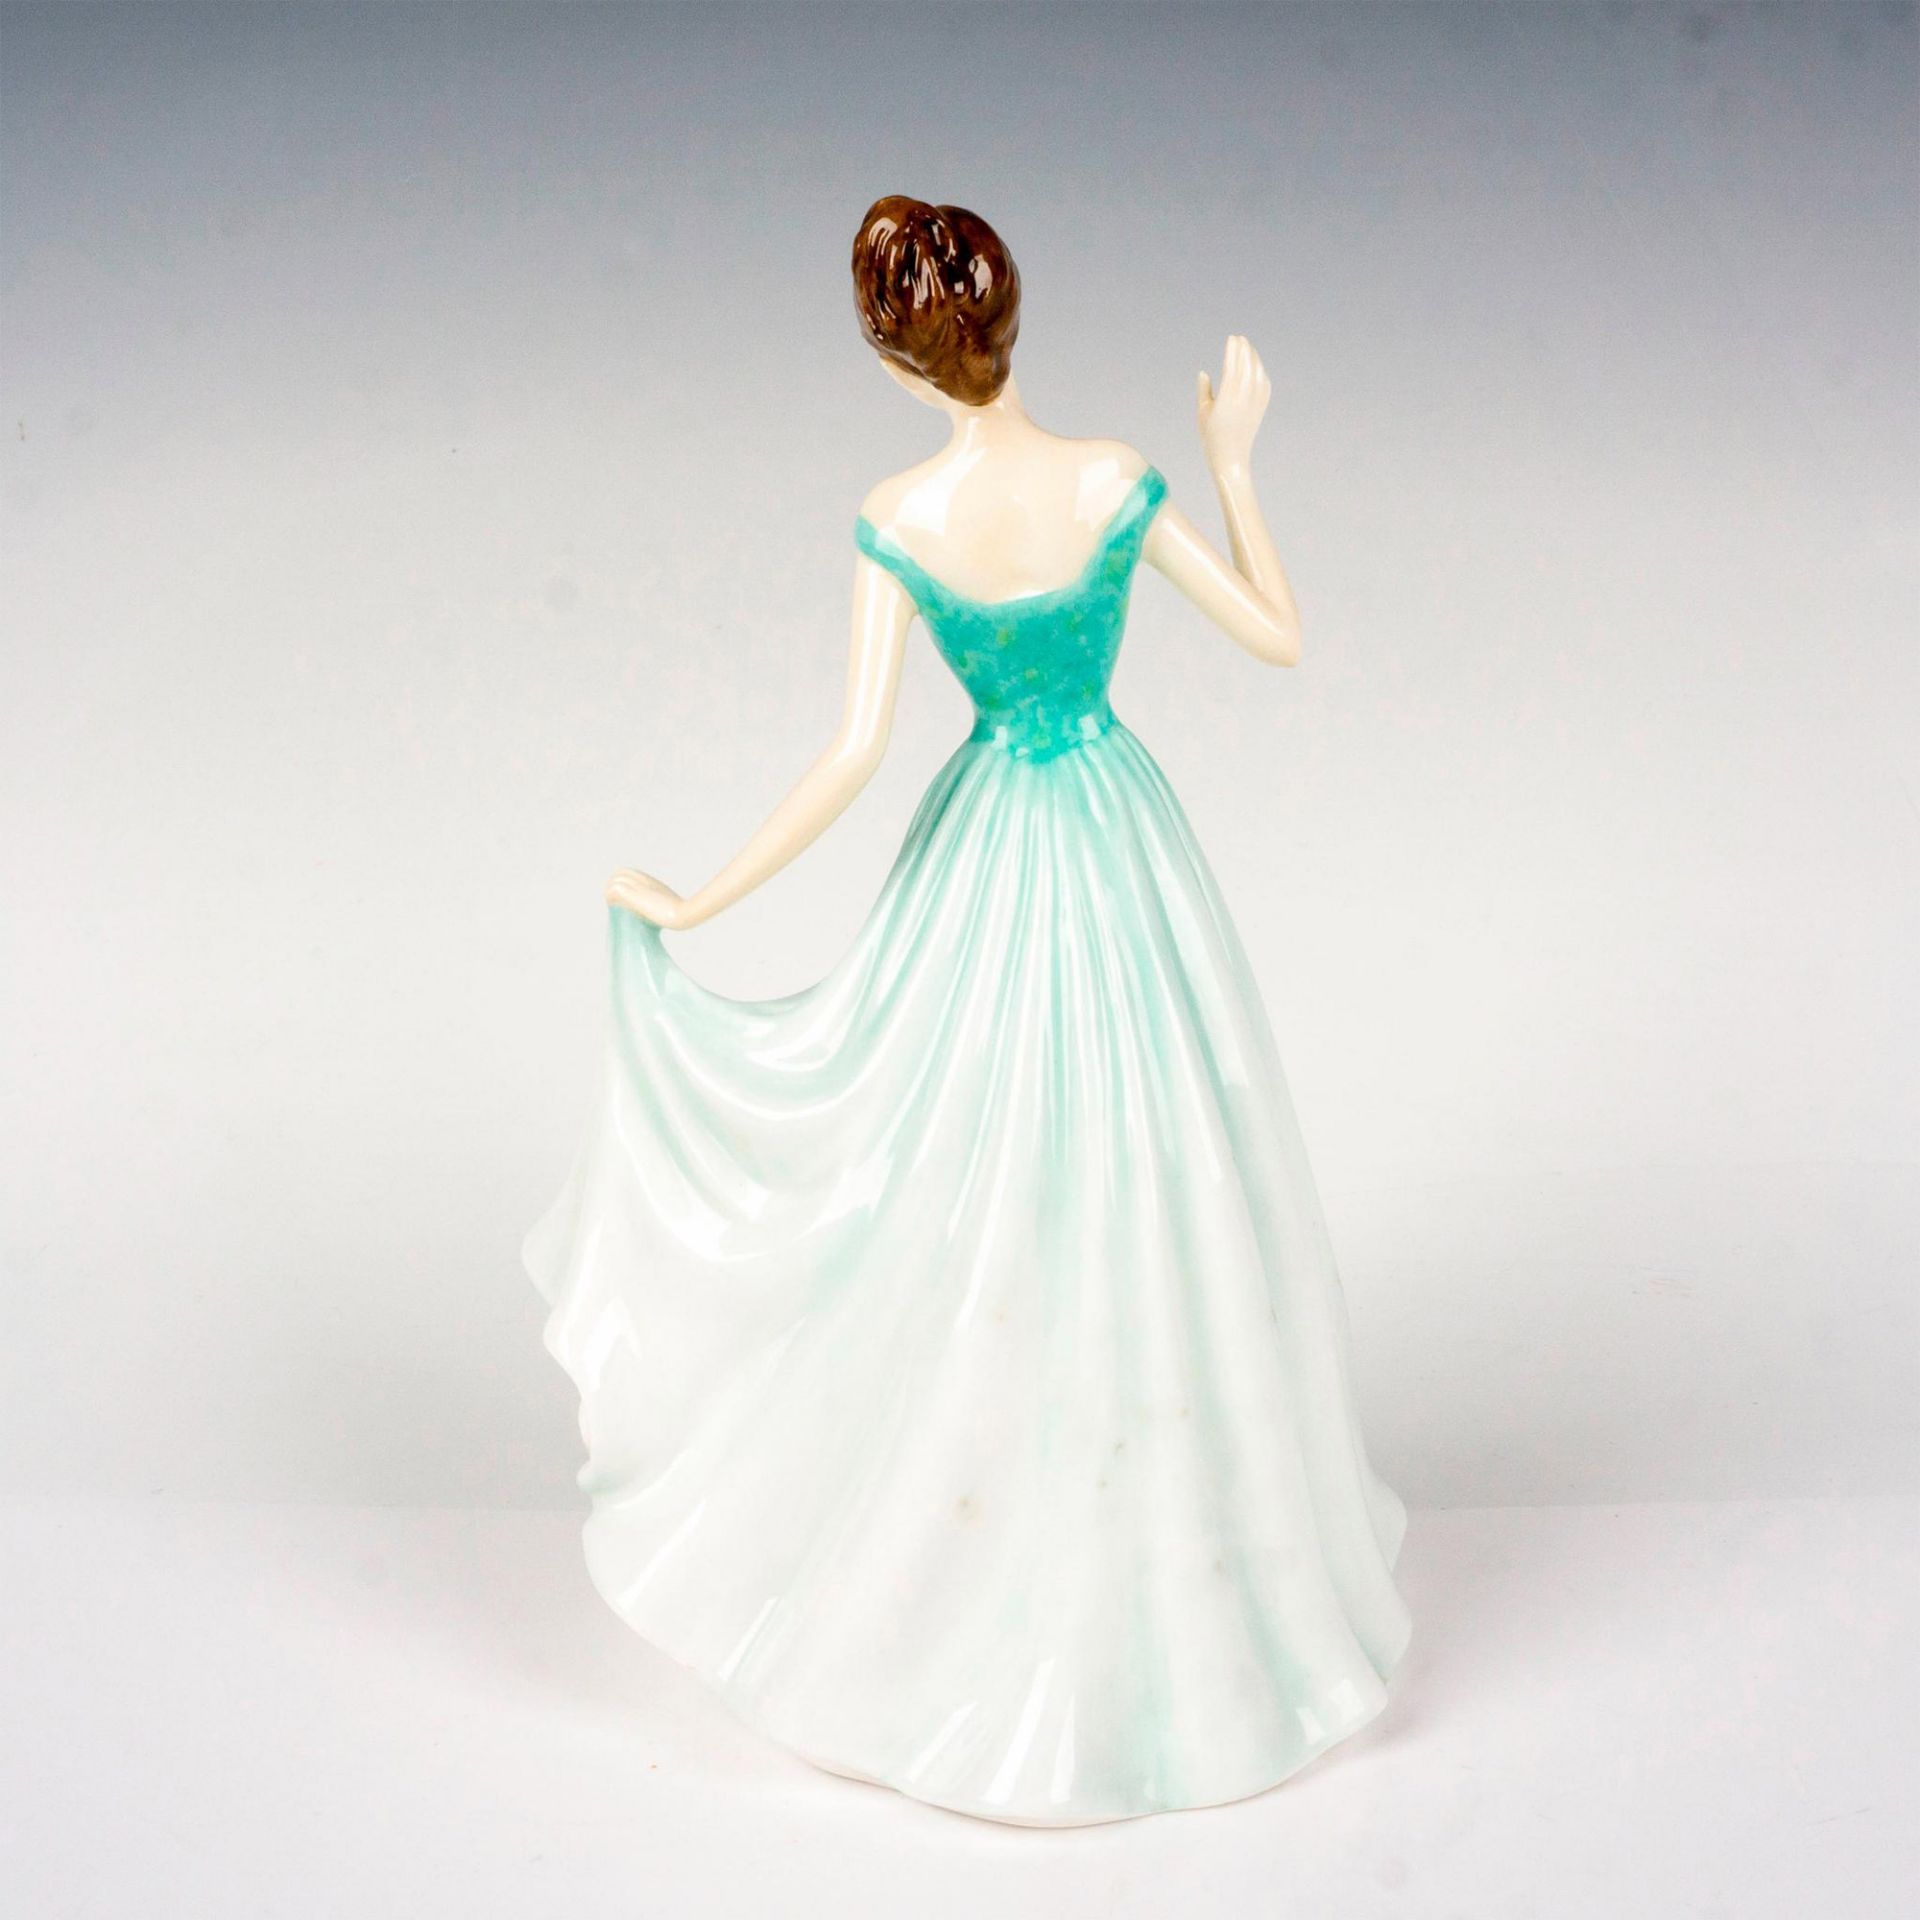 Chloe - Royal Doulton Prototype Design Original Figurine - Image 2 of 3